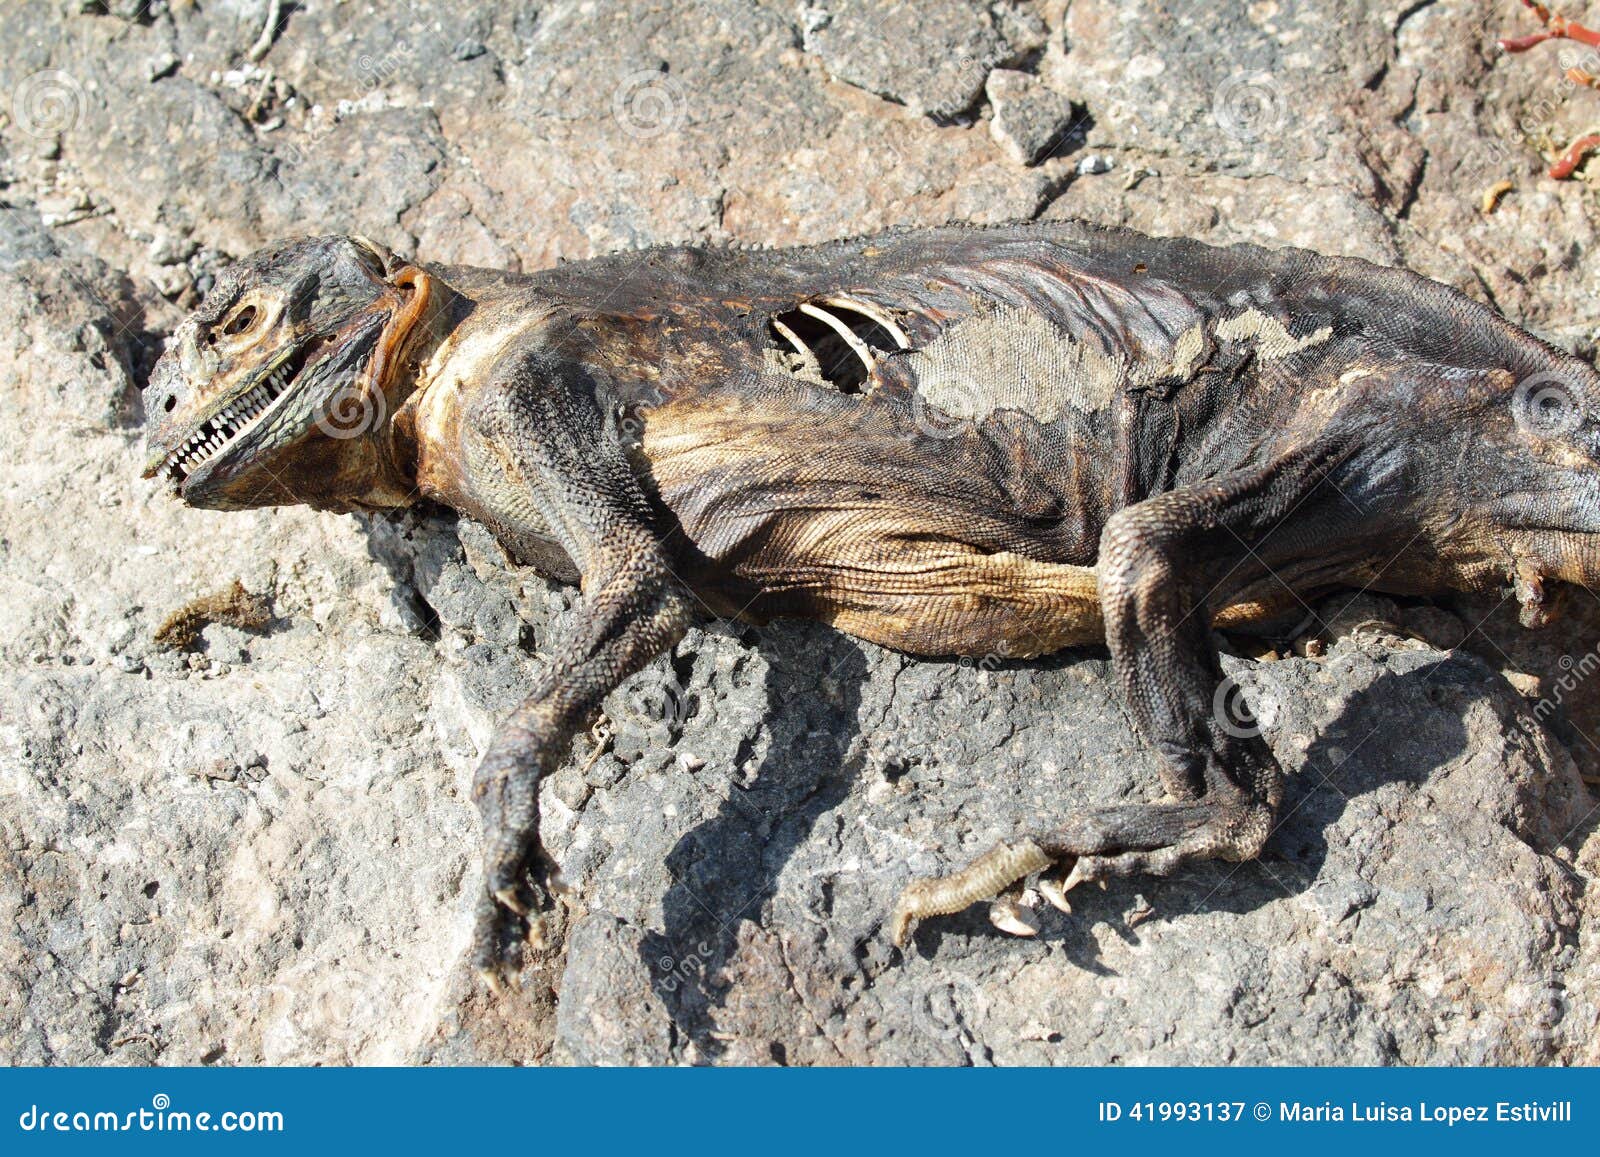 iguana-muerta-de-la-tierra-en-la-isla-del-sur-de-la-plaza-41993137.jpg